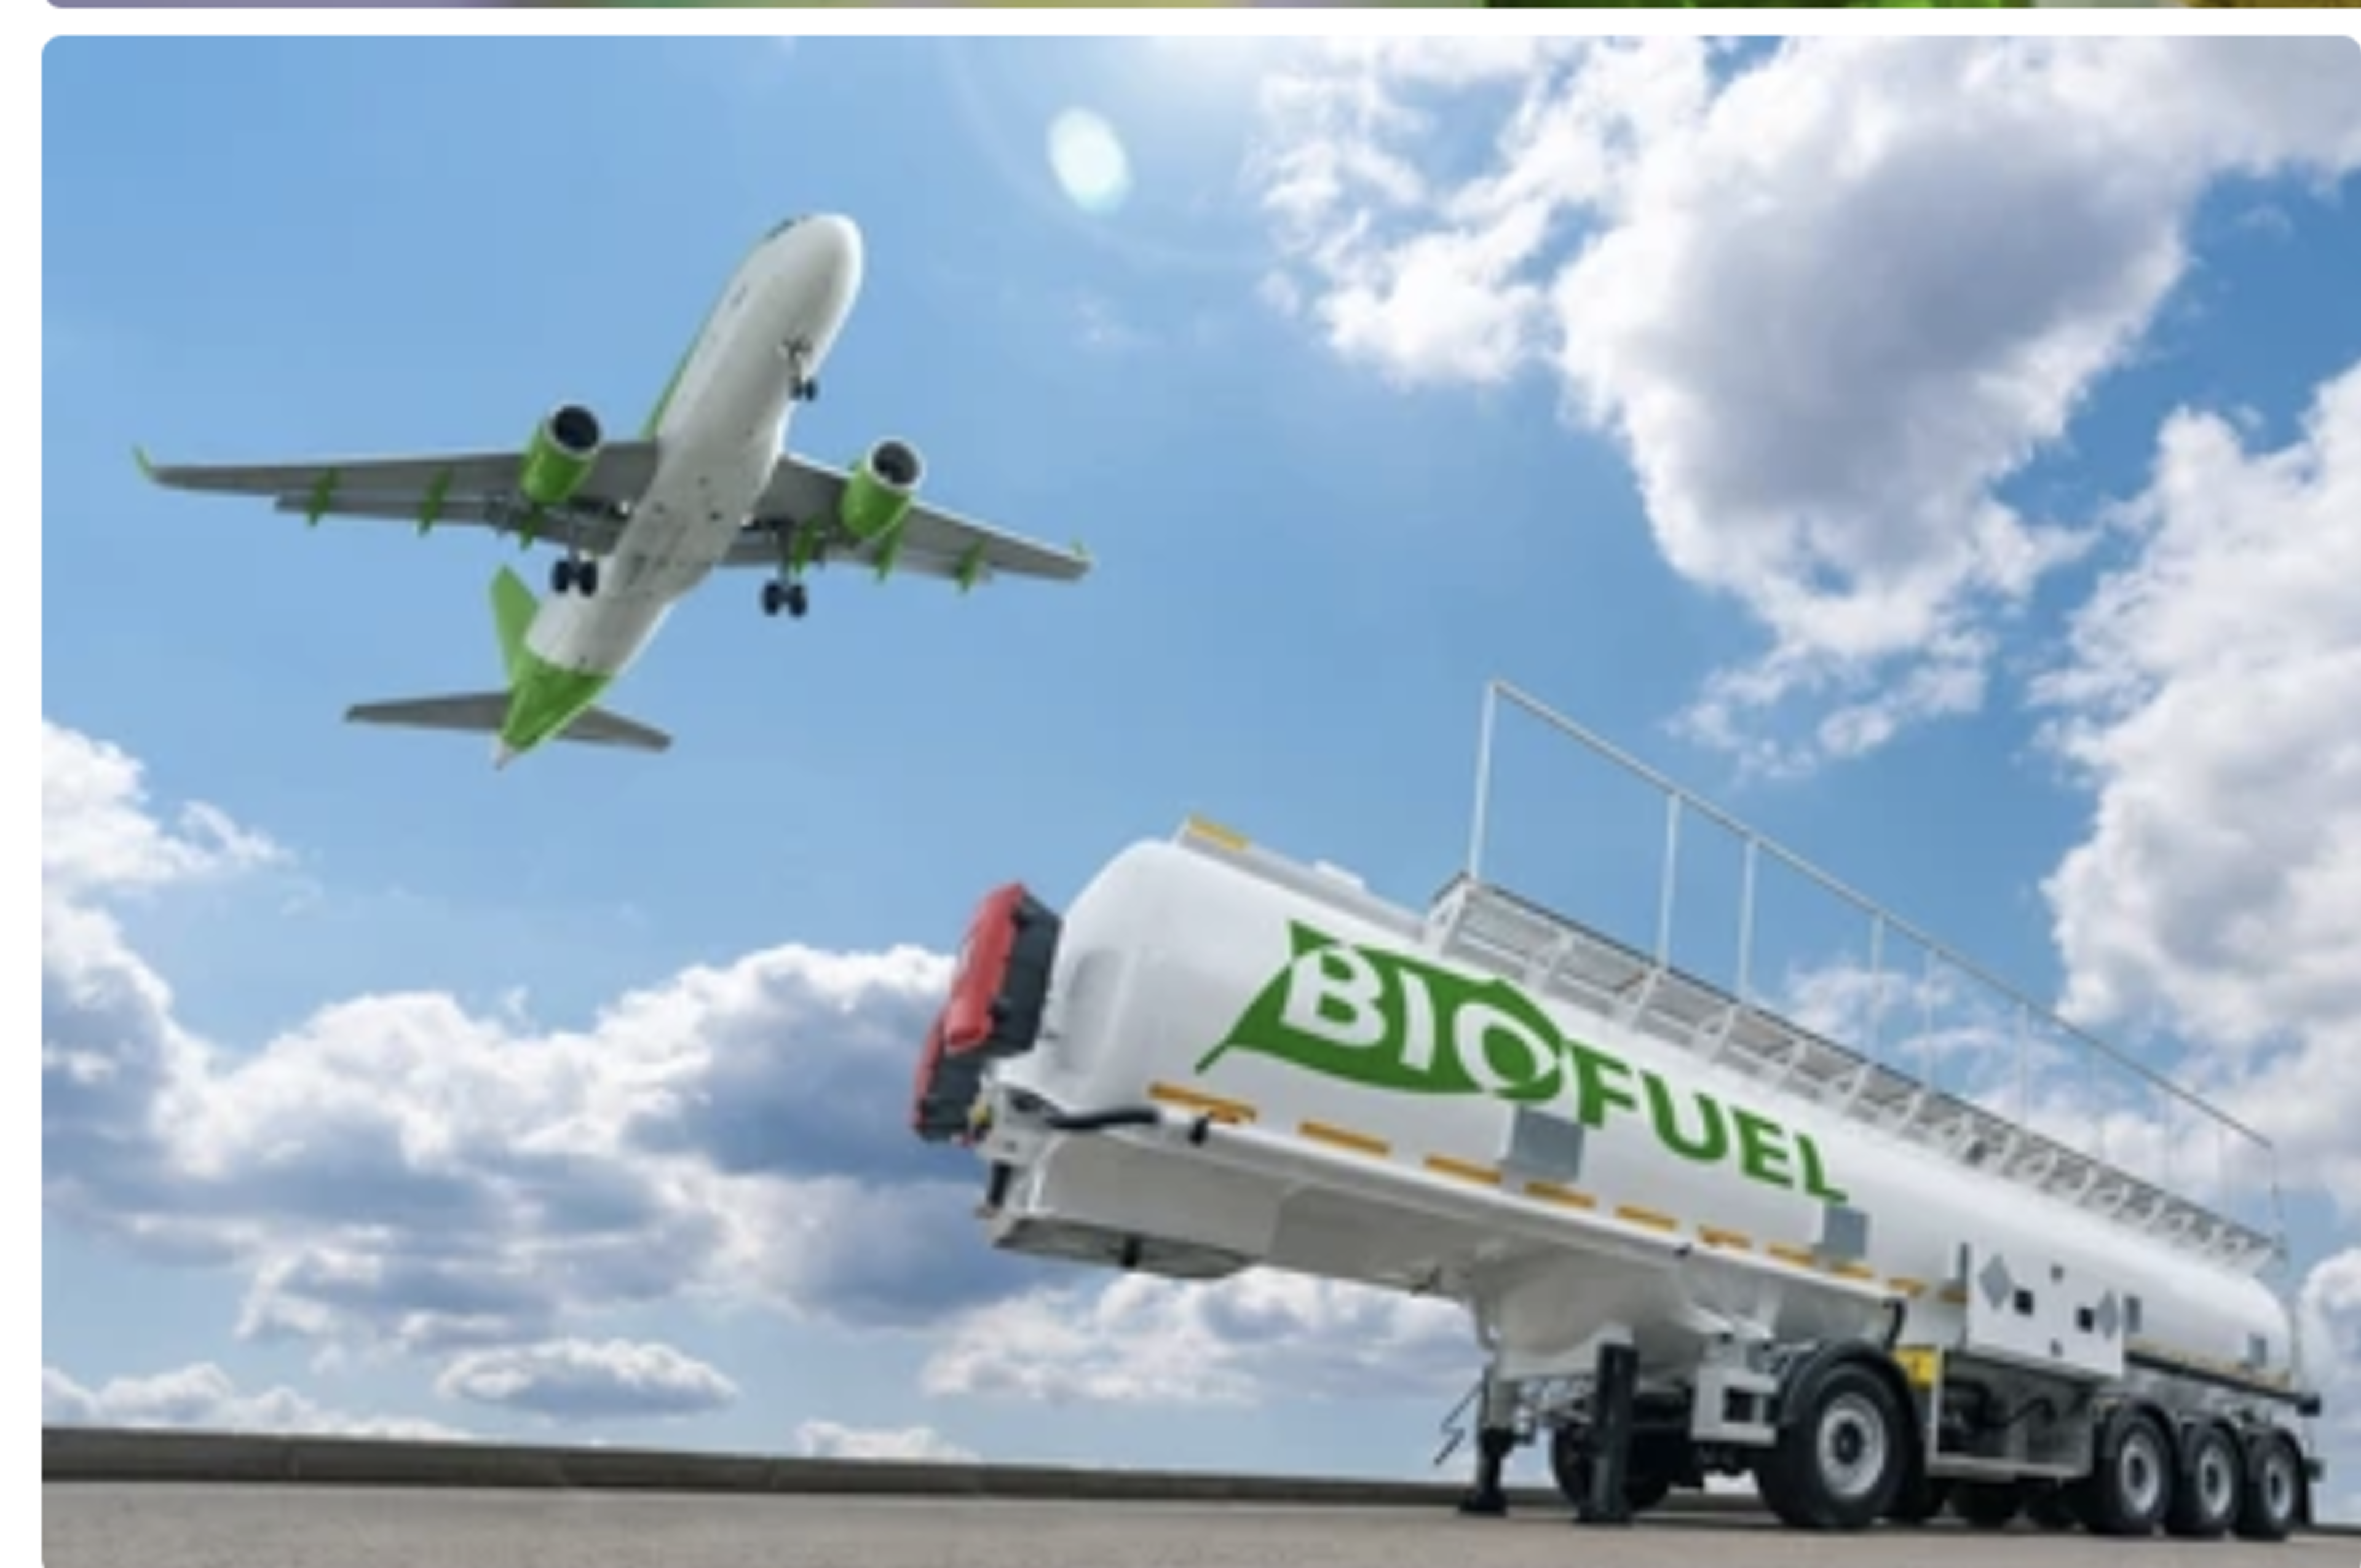 Bio fuel plane image